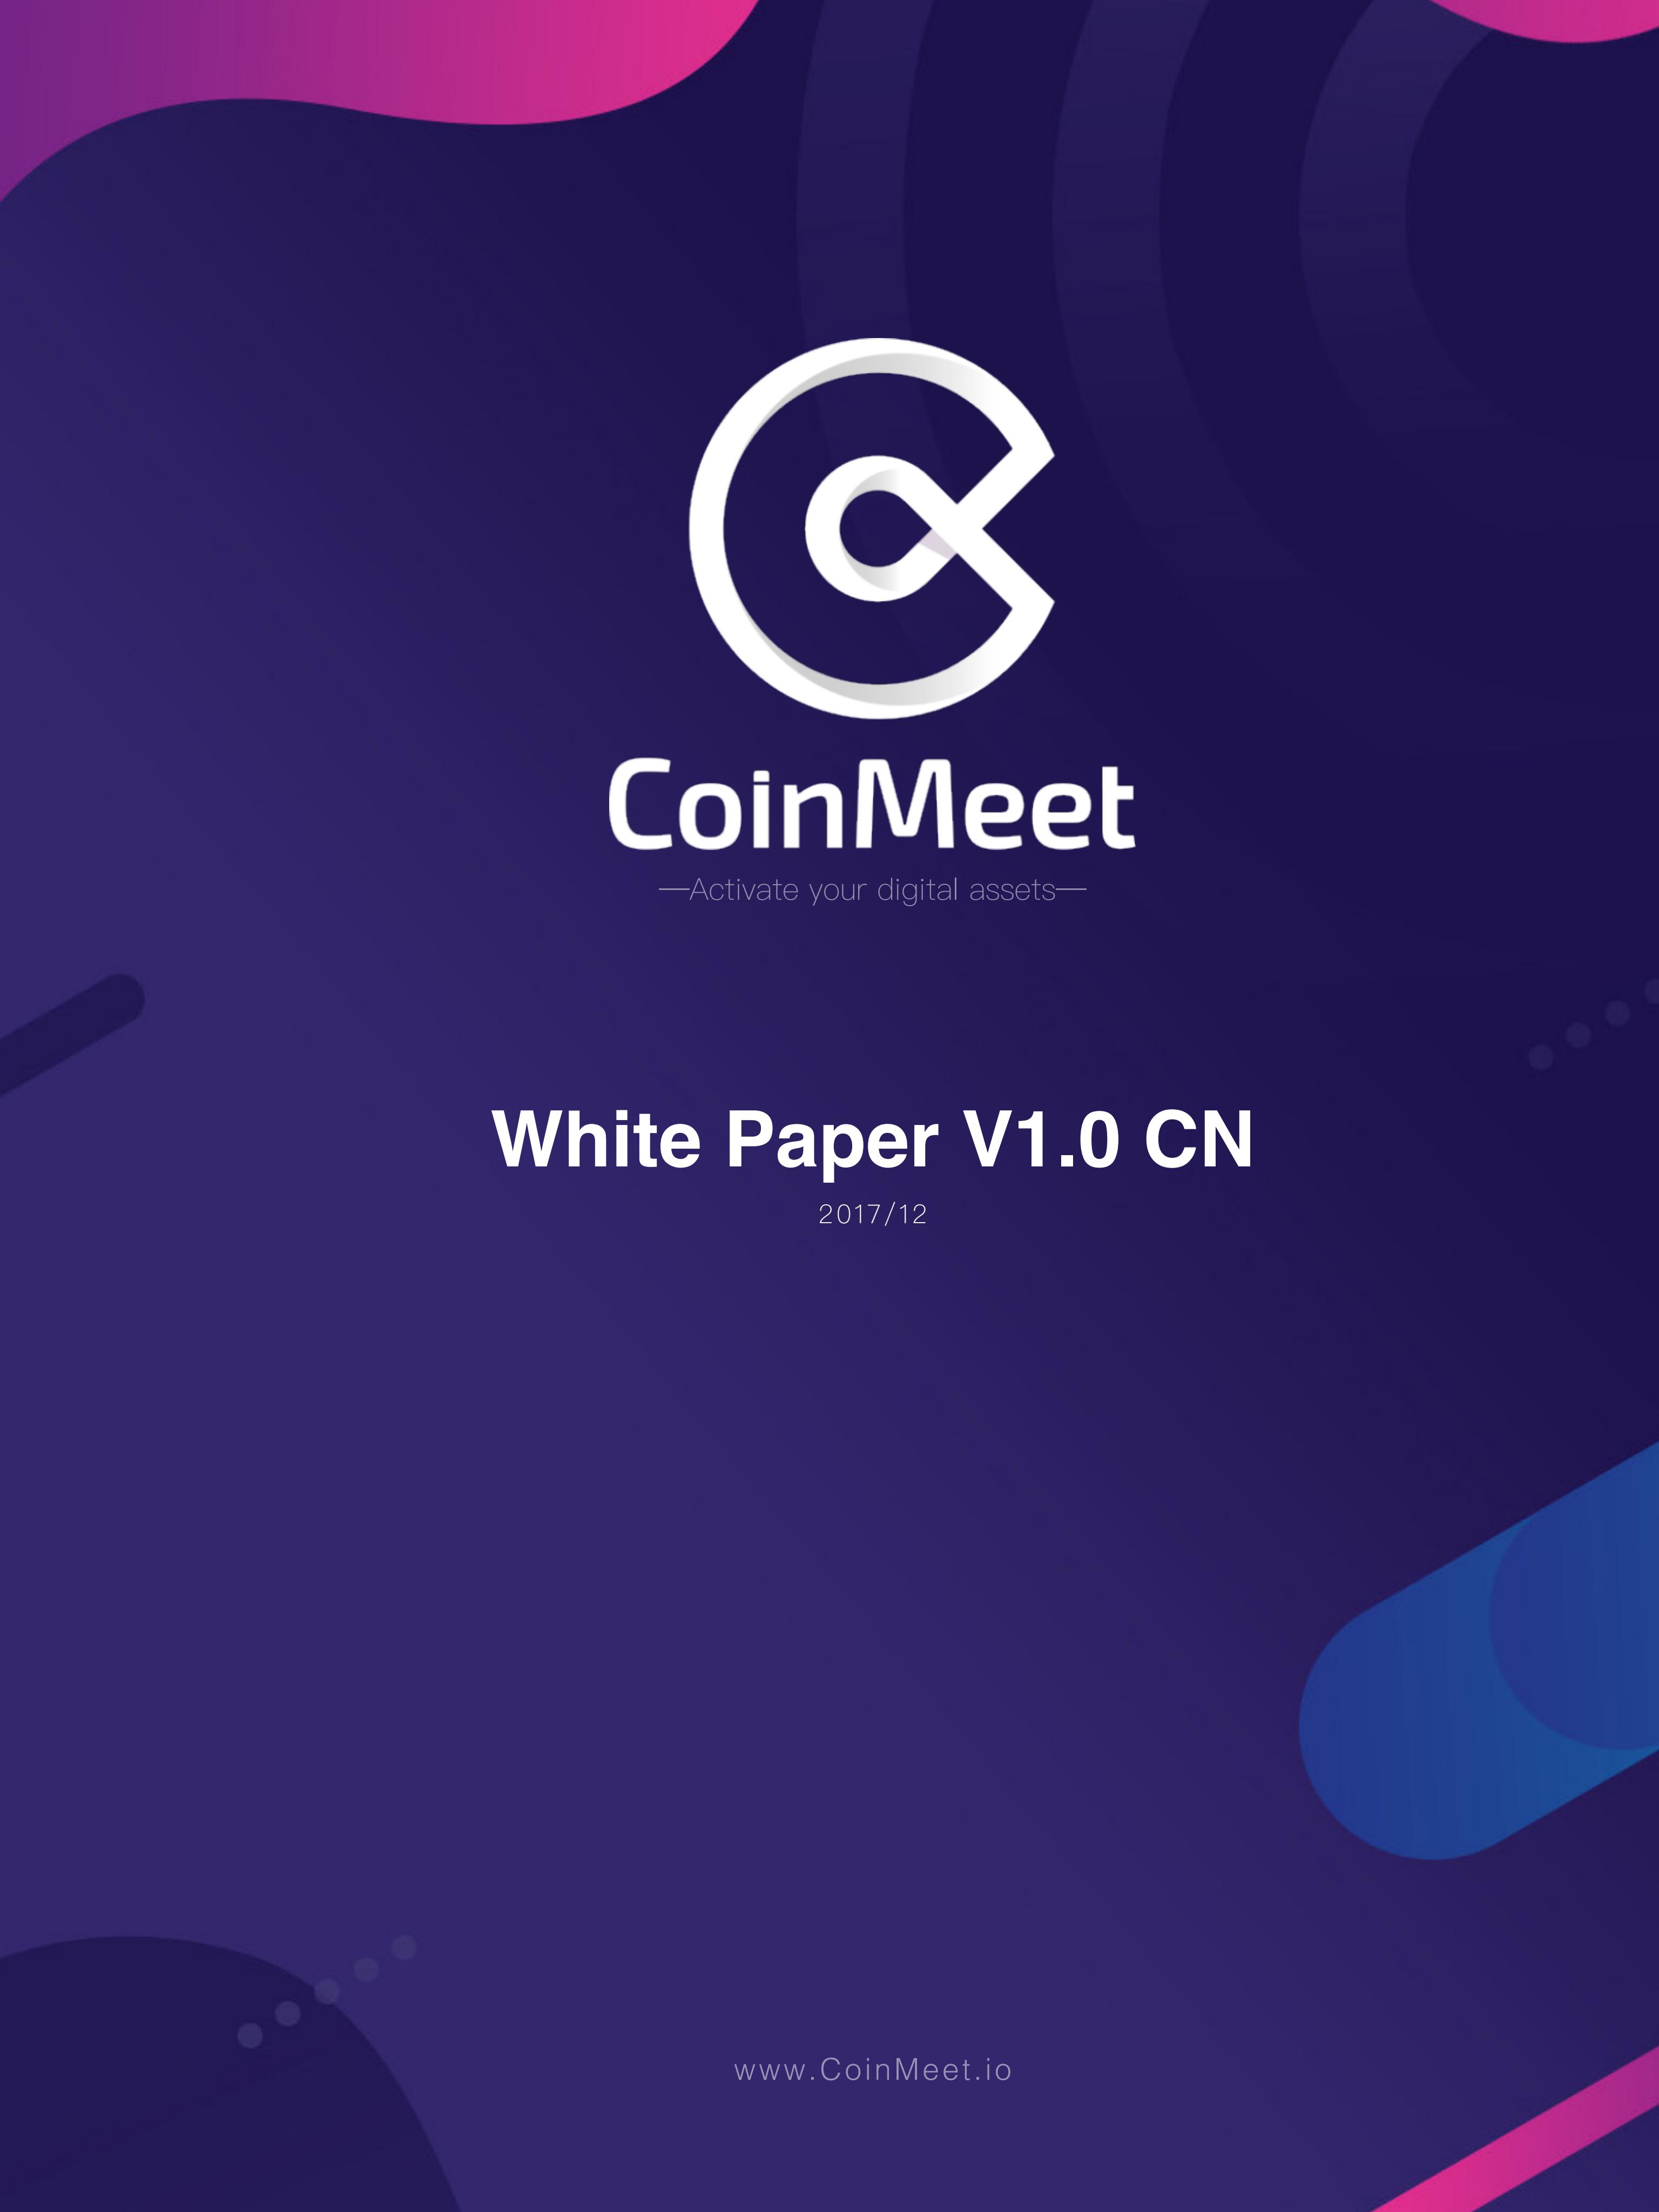 MEET_CoinMeet_Whitepaper_CN_00.jpg